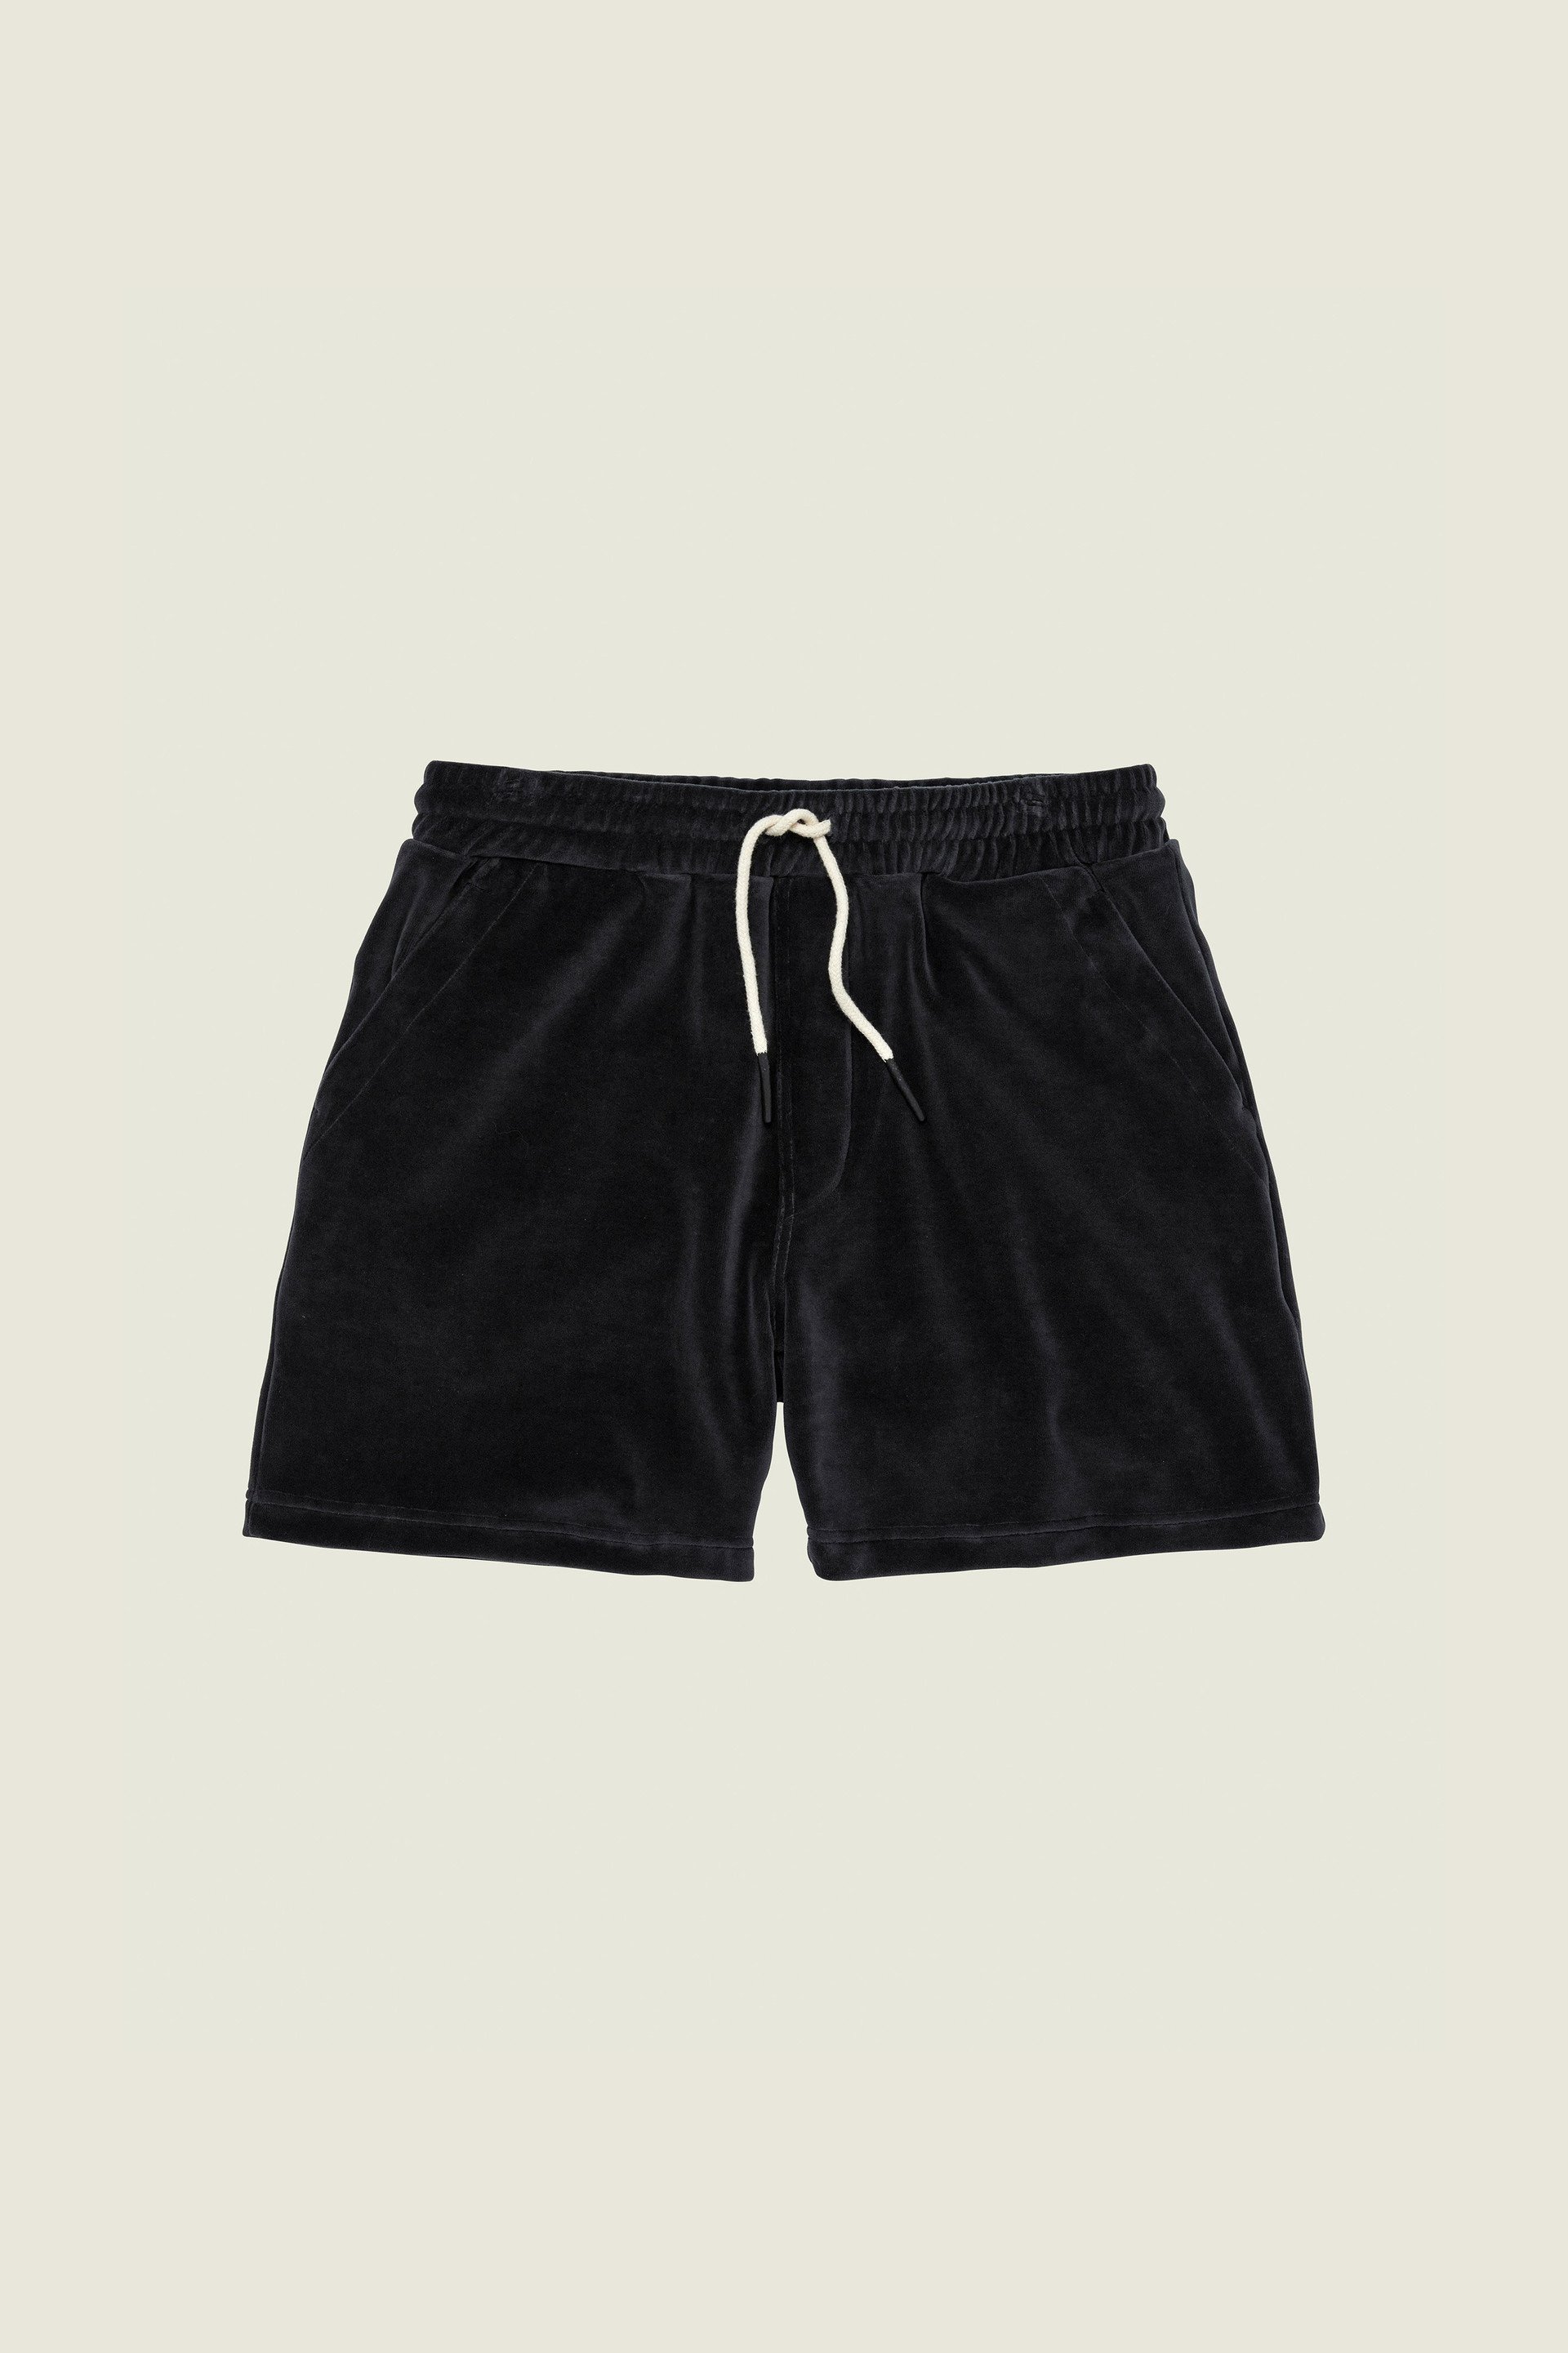 Nearly Black Velour Shorts